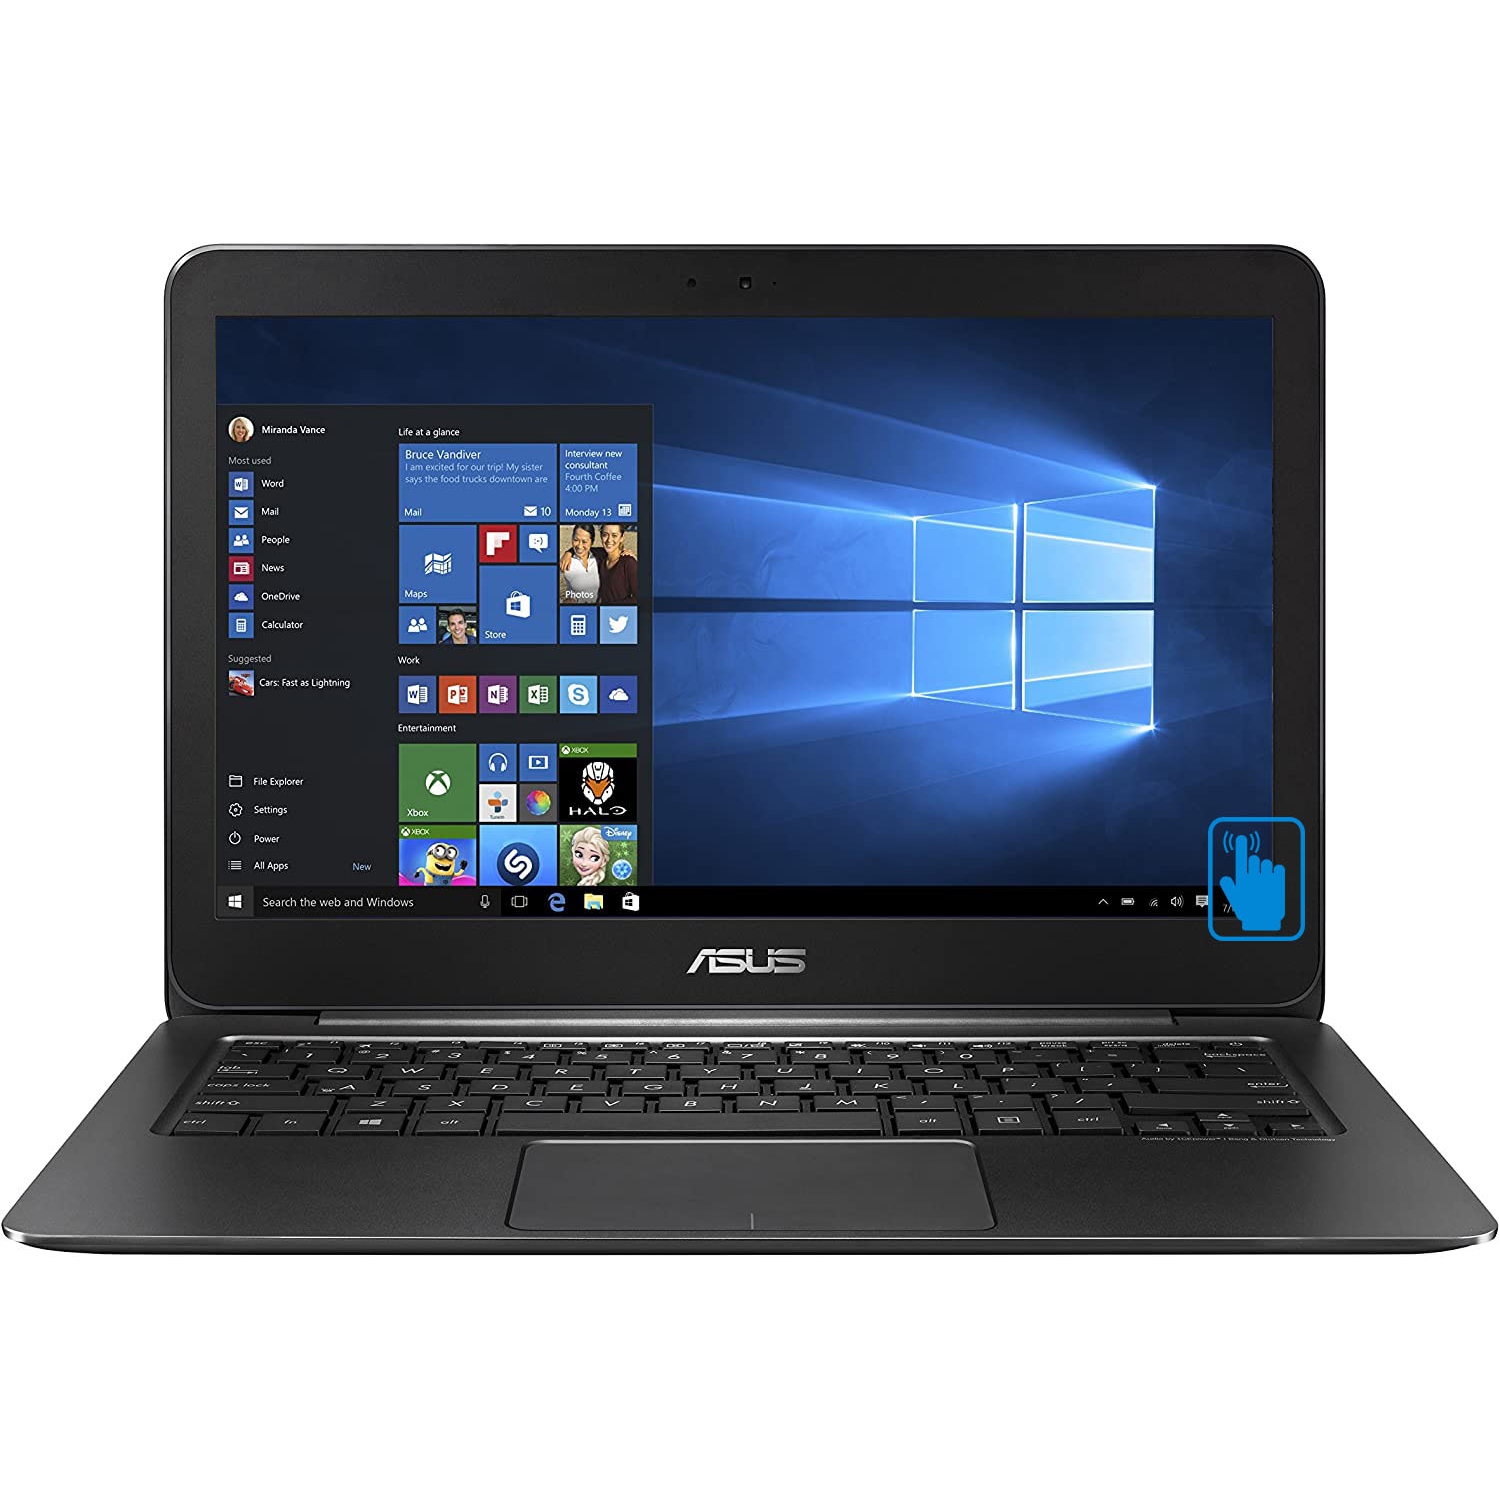 Custom ASUS ZenBook Signature Edition Laptop (Intel M3-6Y30, 8GB RAM, 1TB m.2 SATA SSD, Intel HD 515, 13.3" Win 10 Home)